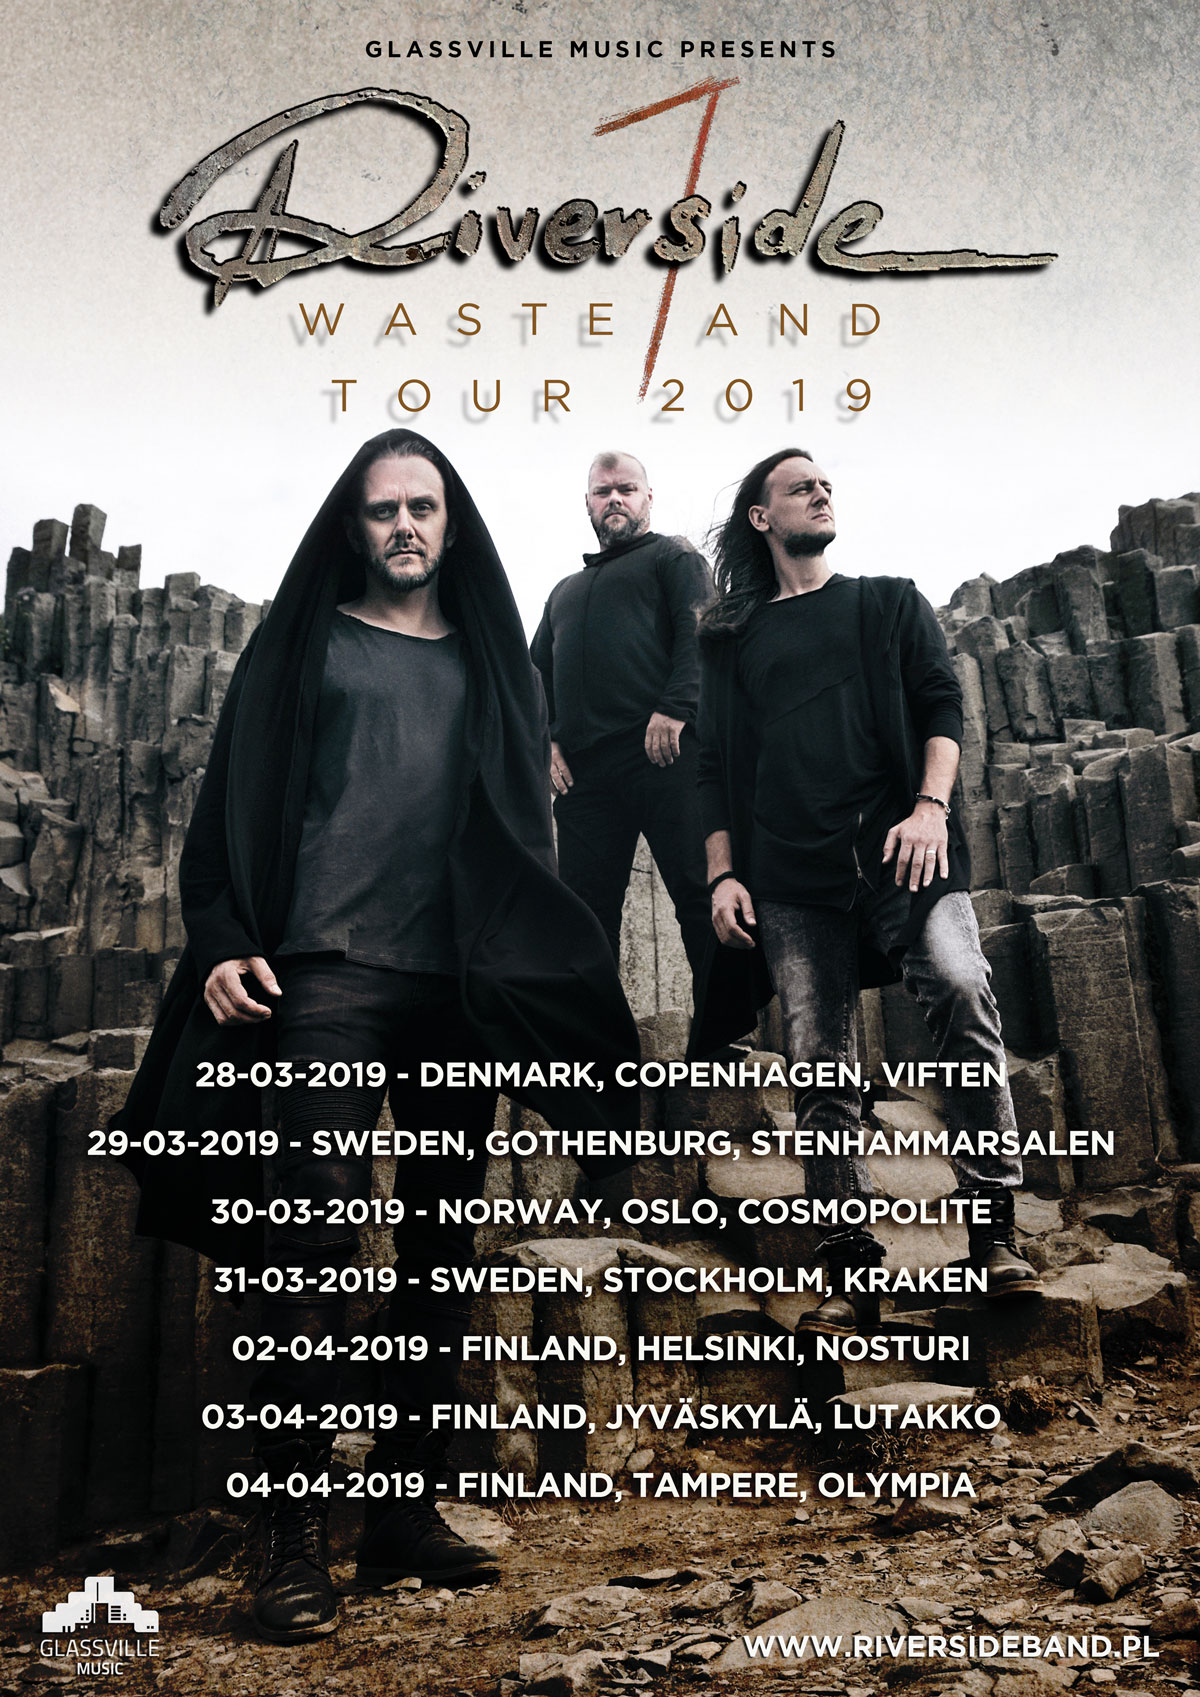 Riverside 2019 Tour Scandinavian leg